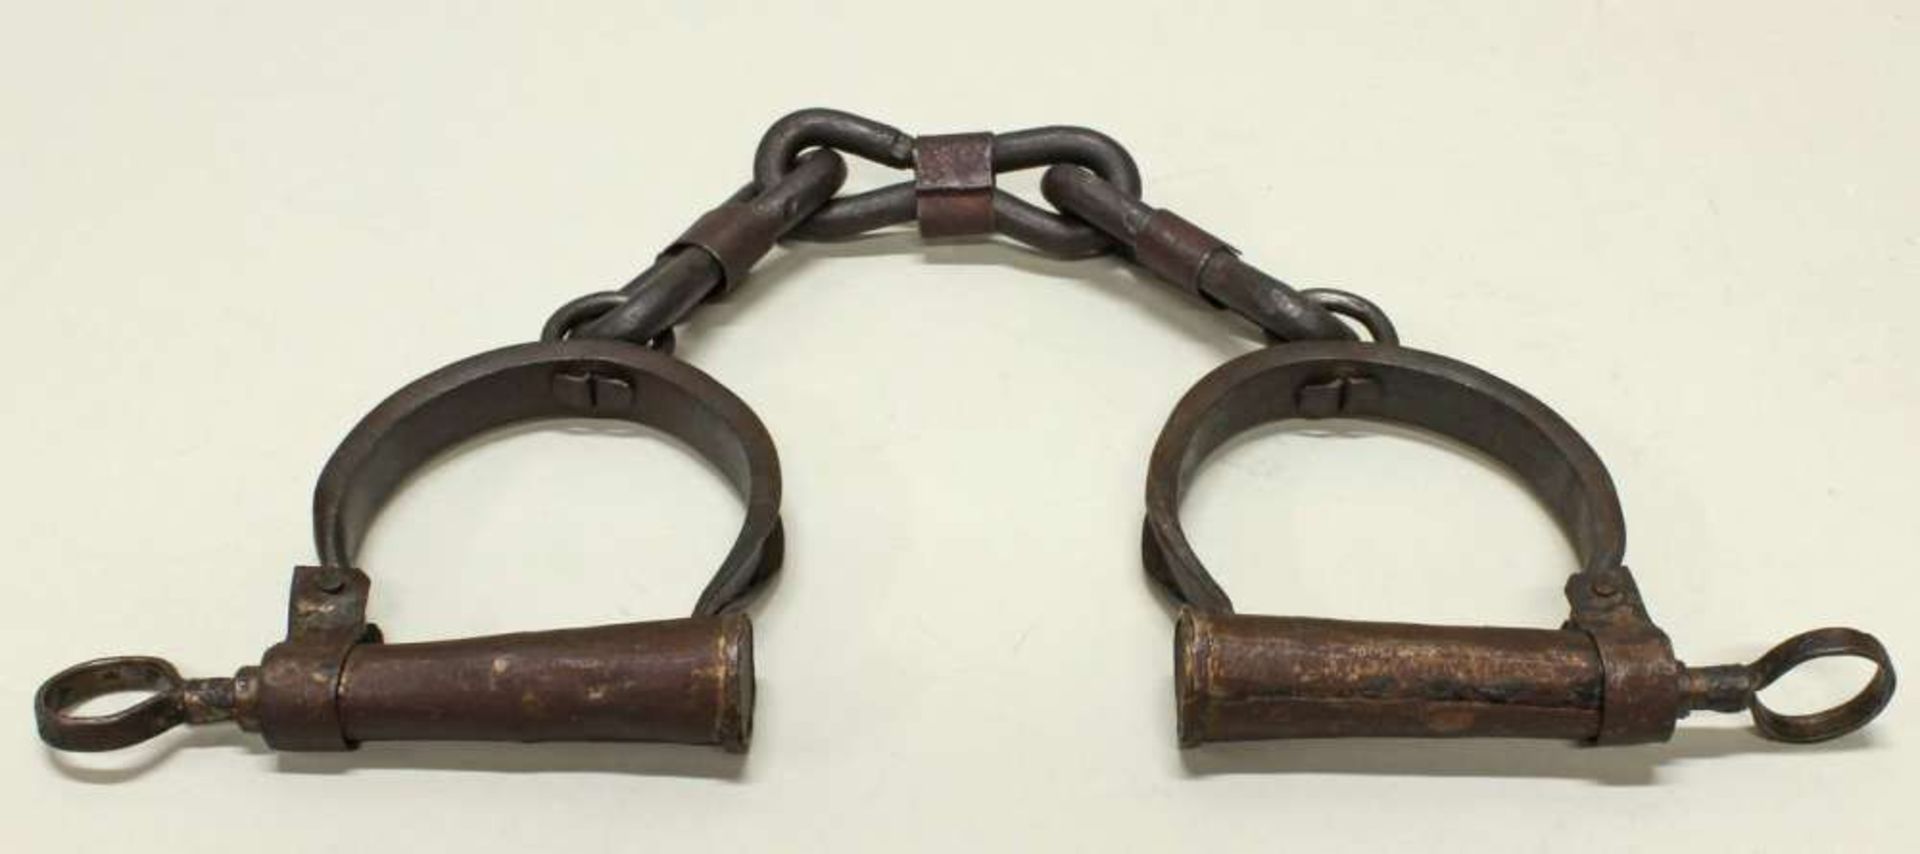 Reserve: 30 EUR        Handschellen, Südamerika, Eisen, 40 cm lang